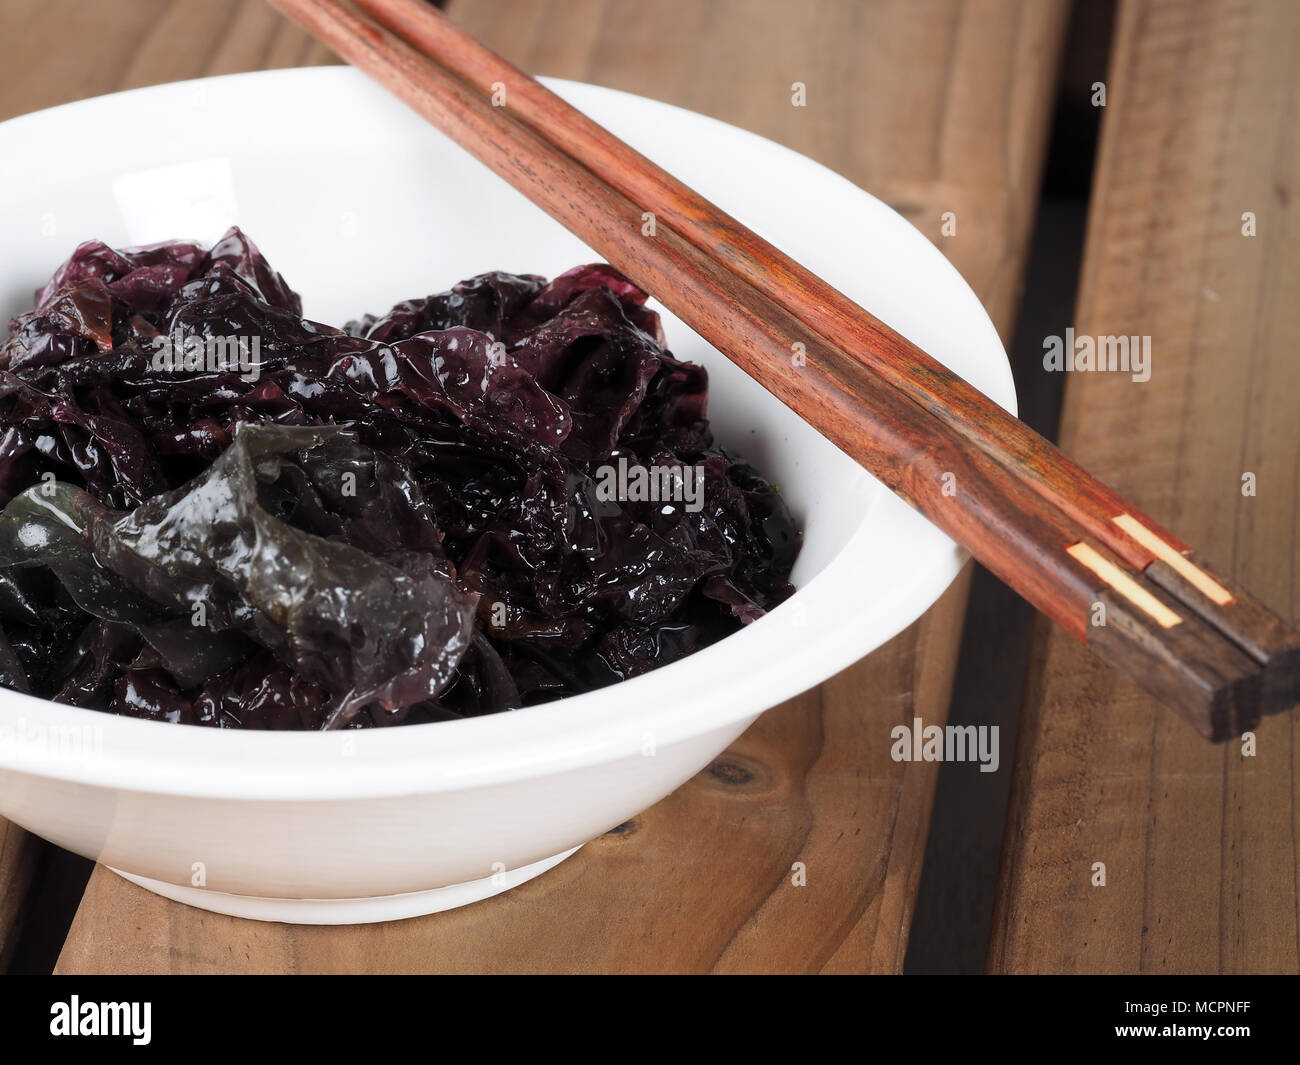 https://c8.alamy.com/comp/MCPNFF/nori-seaweed-alga-nori-edible-seaweed-of-the-red-algae-binomial-name-porphyra-umbilicalis-it-is-used-in-dried-sheets-to-wrap-the-sushi-MCPNFF.jpg